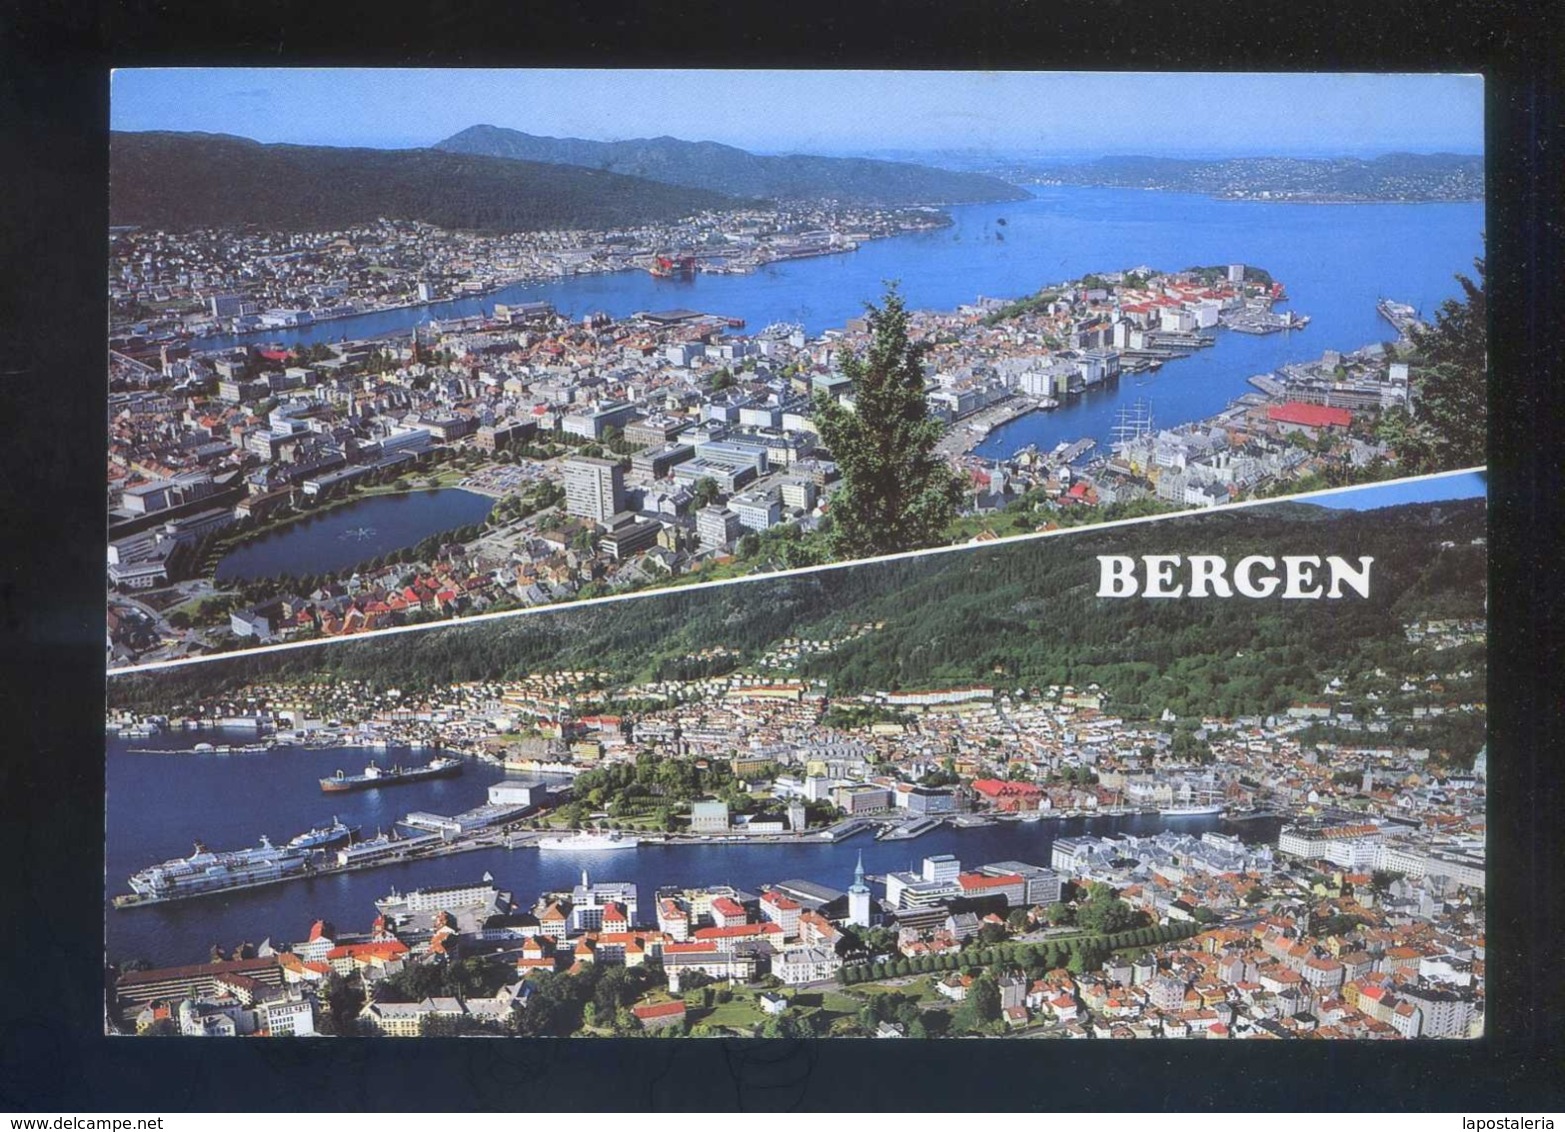 Bergen. Circulada Bergen A Barcelona En 1983. - Noruega